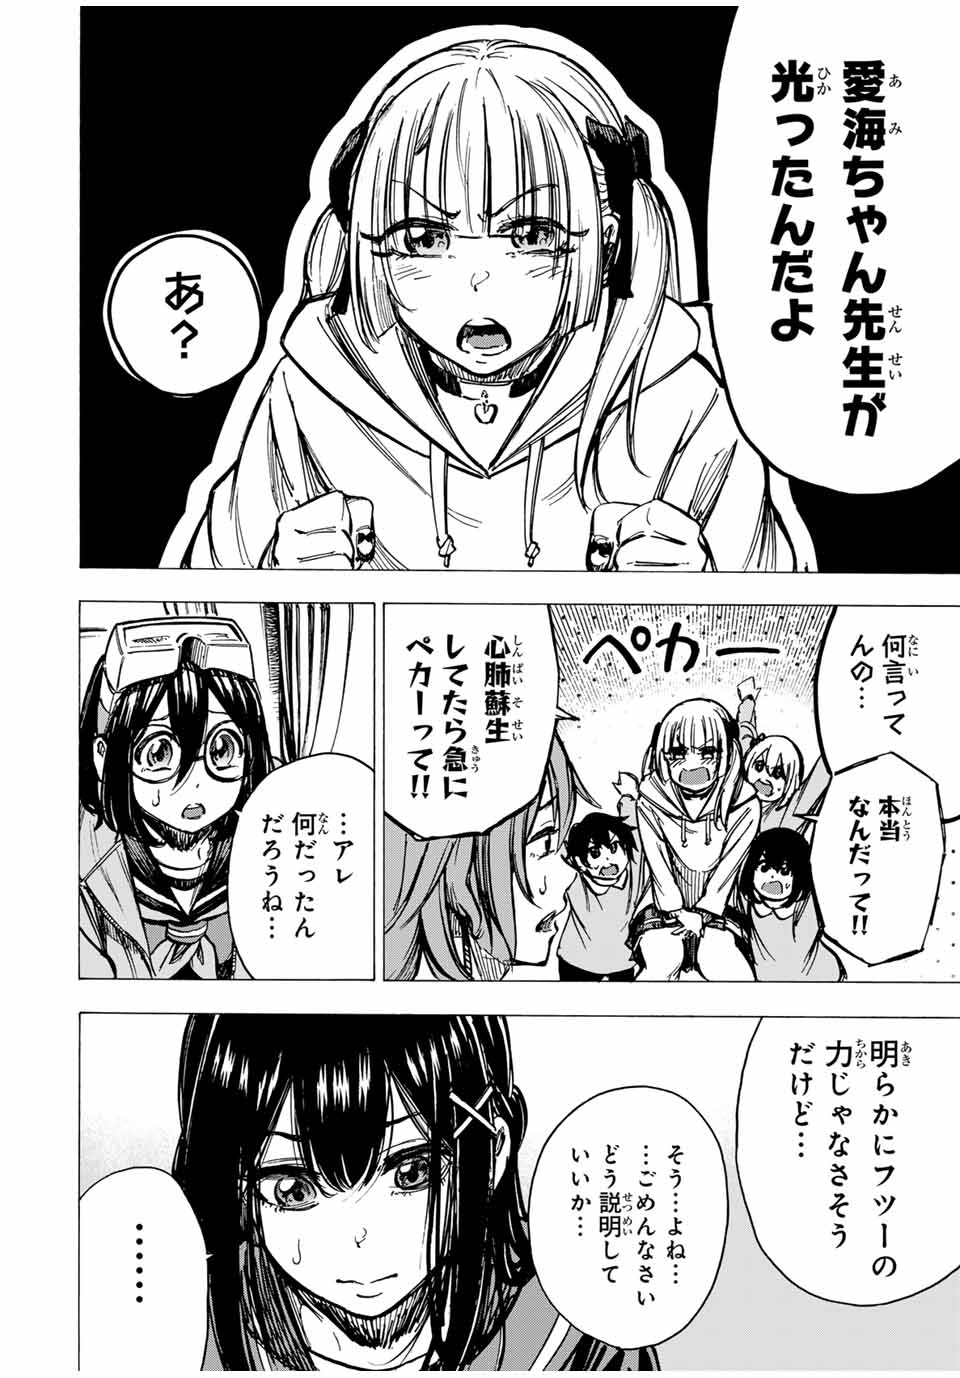 Kaminagashijima – Rinne no Miko - Chapter 21 - Page 2